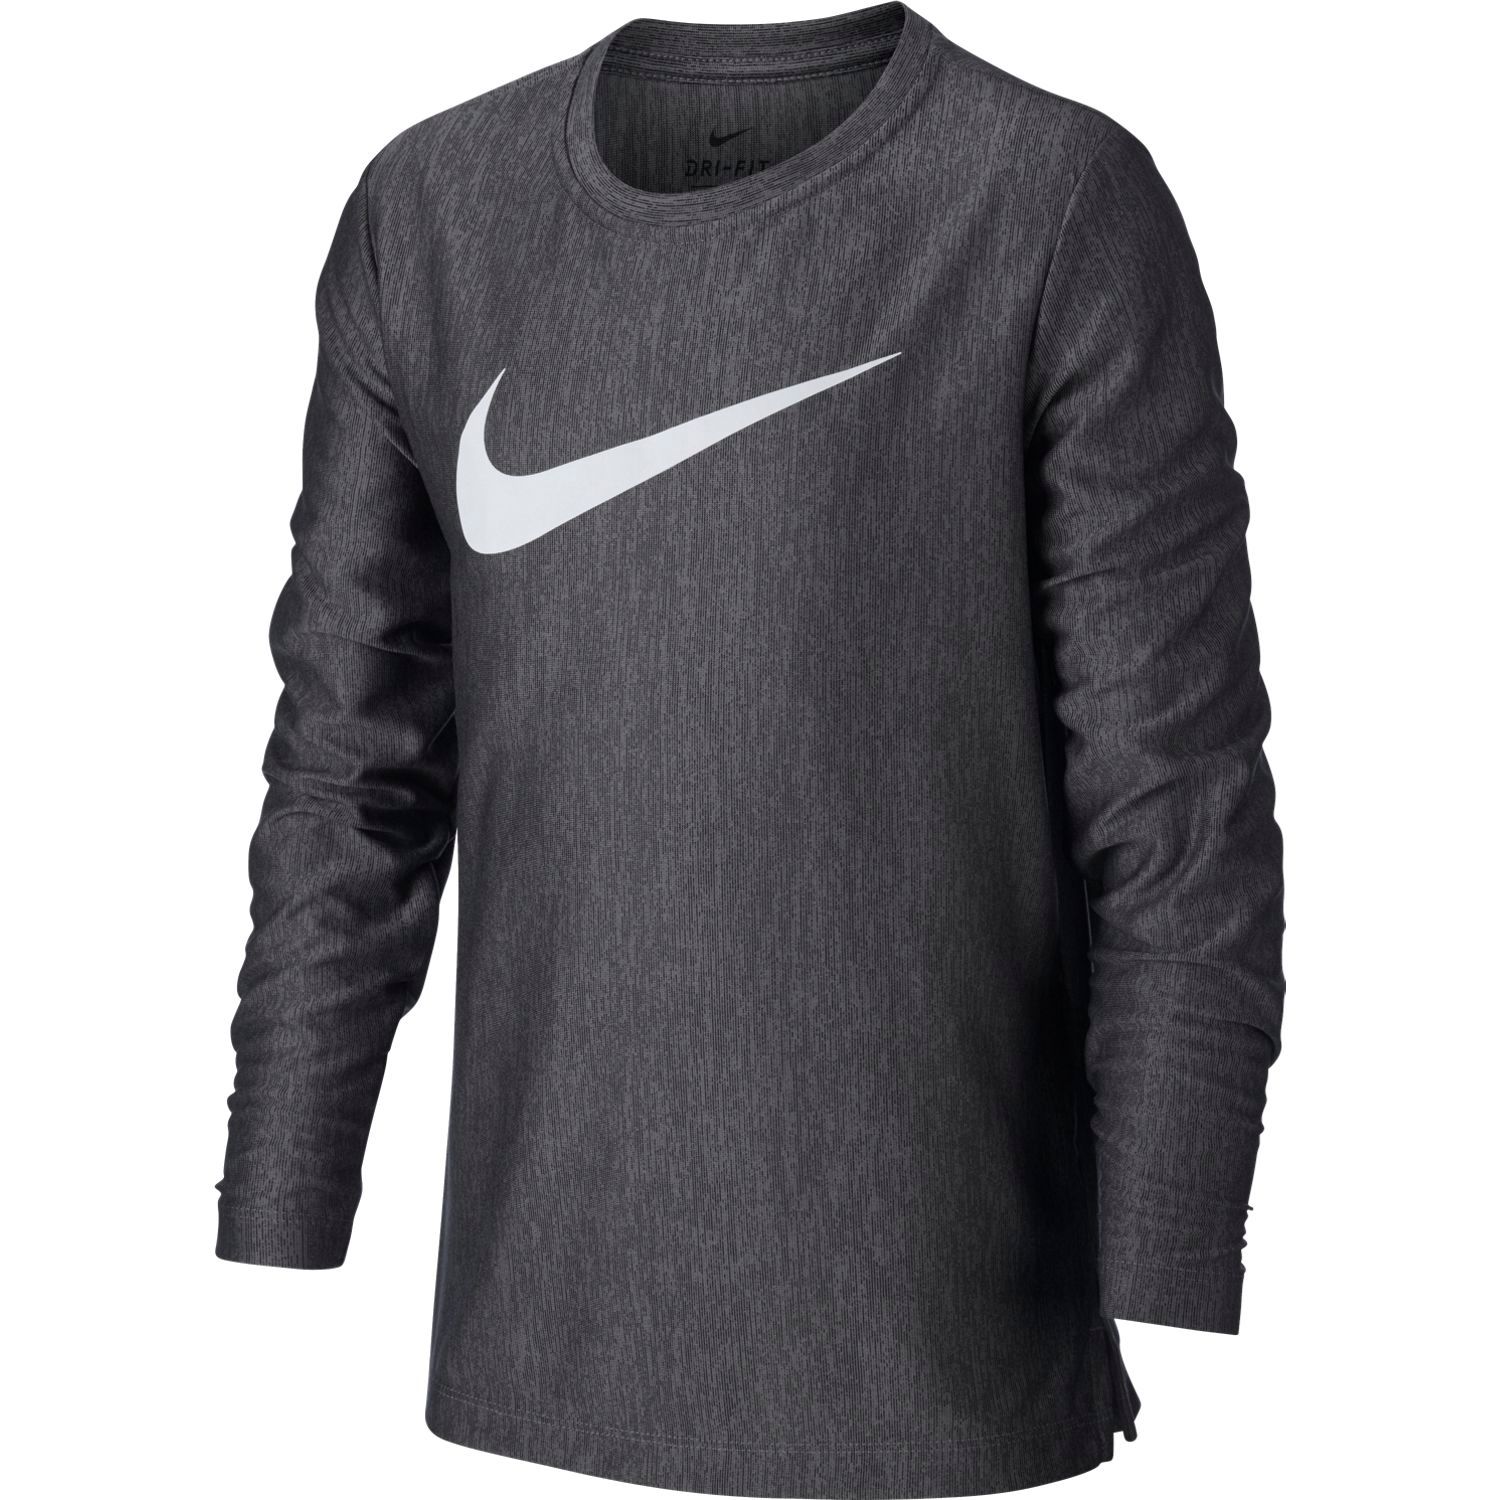 20 Nike Dri-FIT Long-Sleeve Training Top